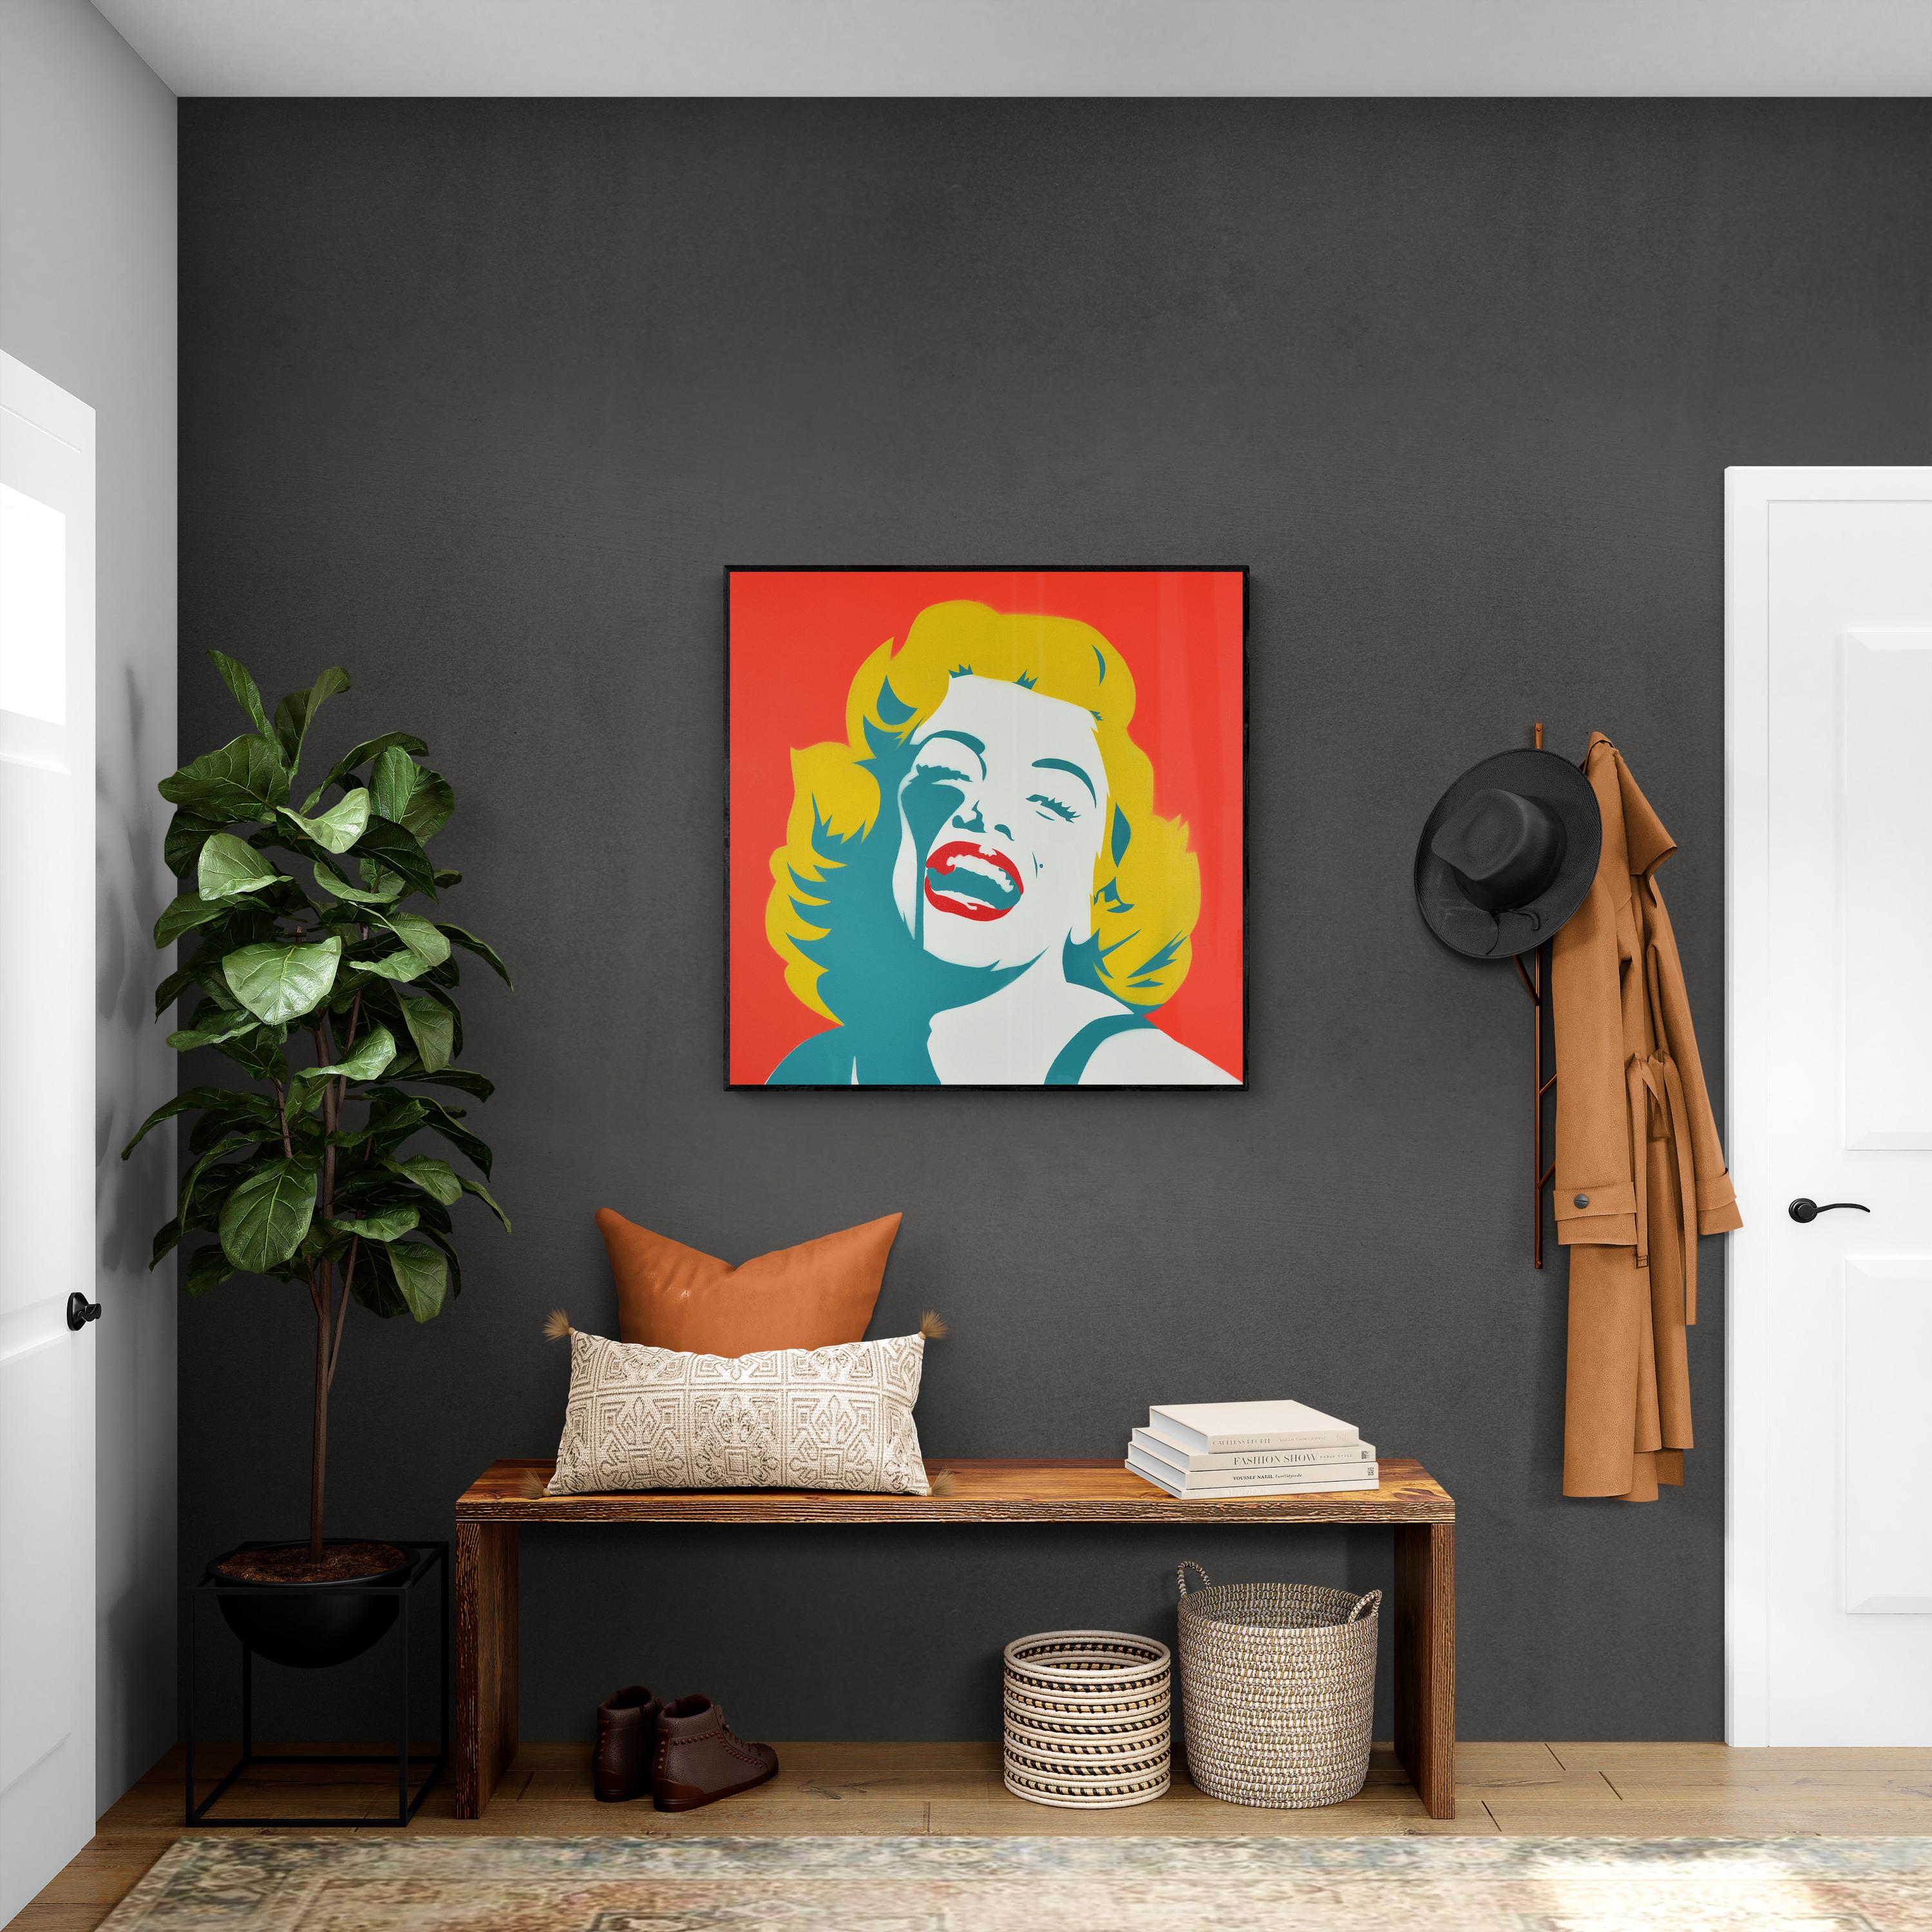 PURE EVIL: Screaming Marilyn Monroe CANVAS - Street art, Pop Art - Orange Portrait Painting by Pure Evil